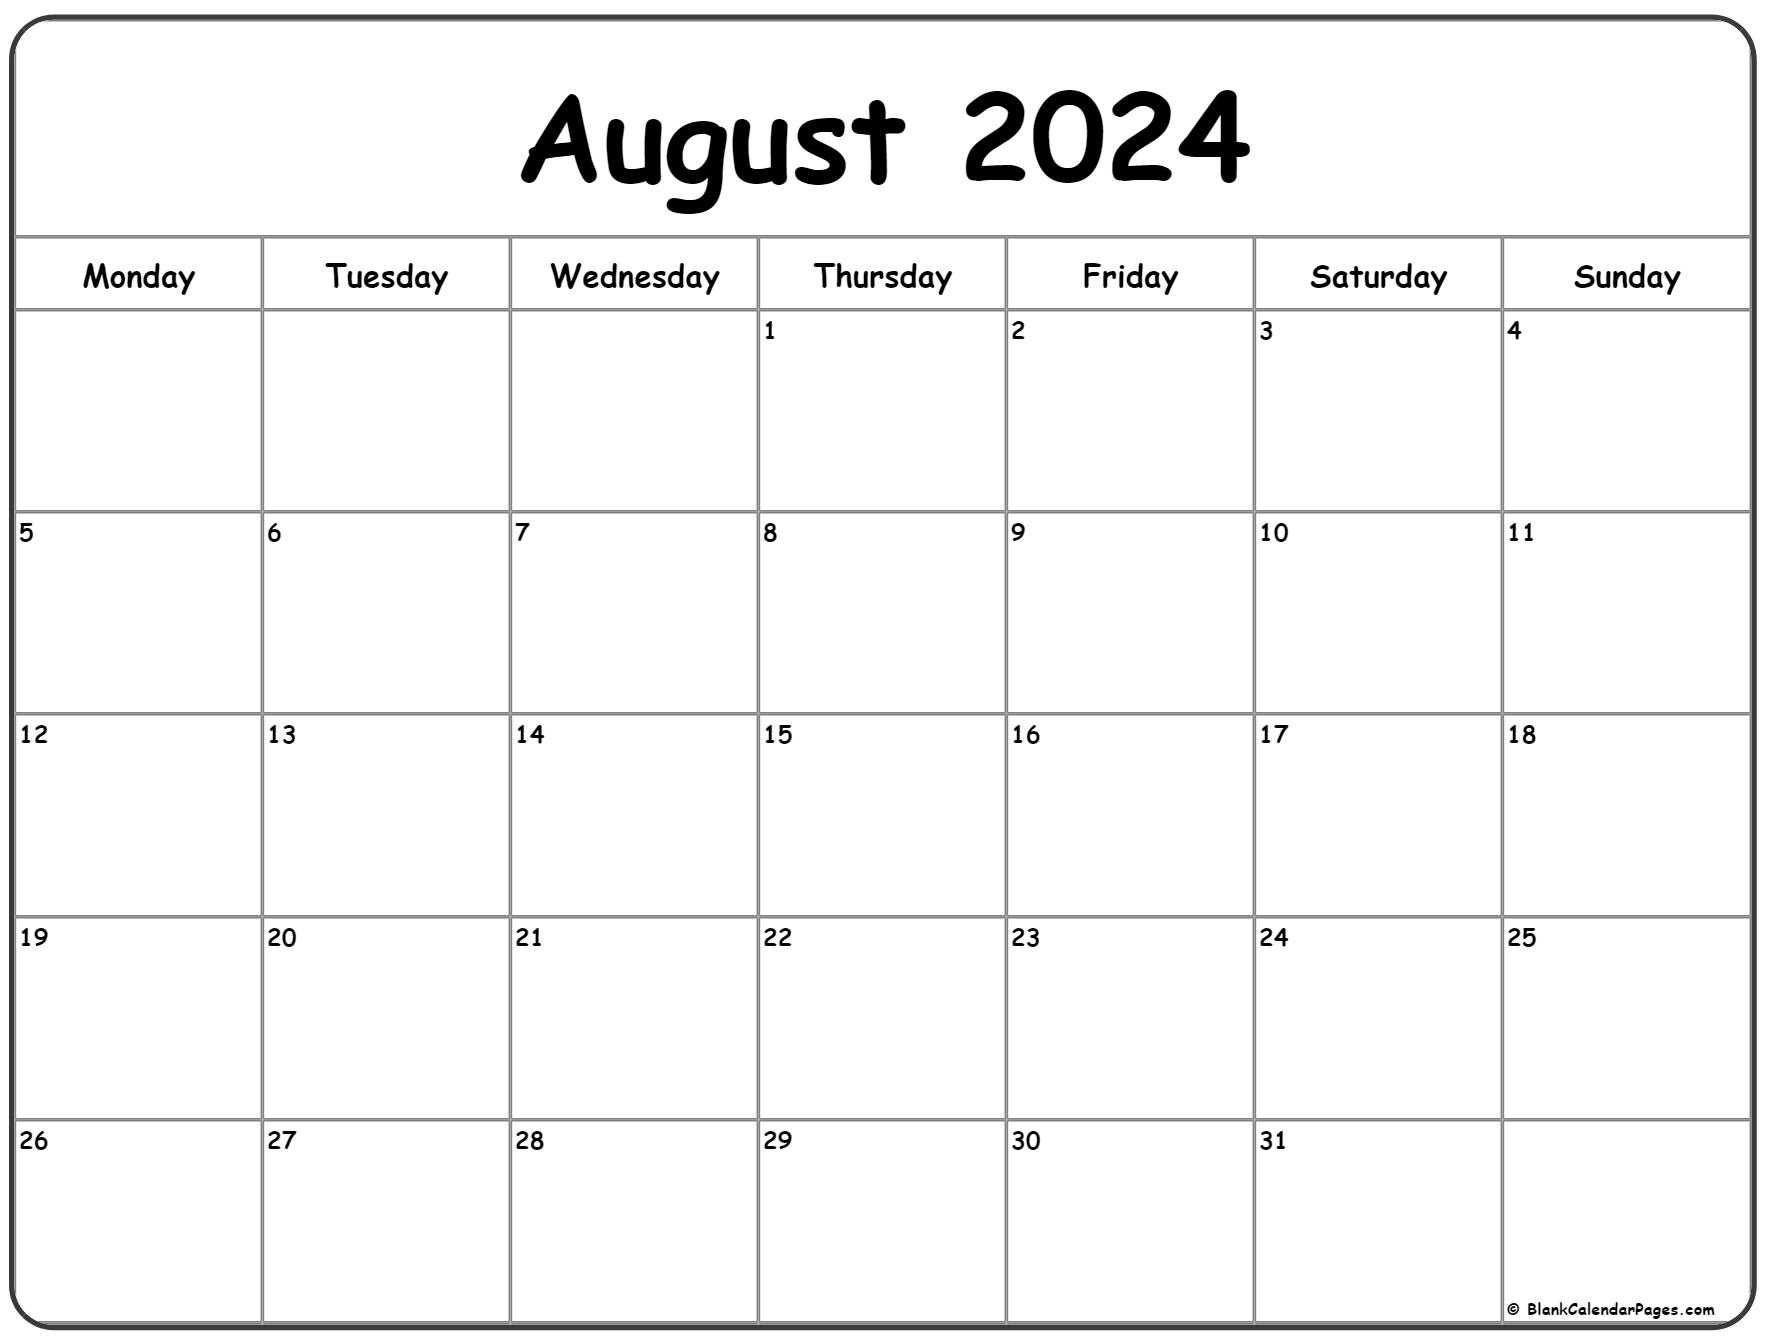 August 2024 Monday Calendar | Monday To Sunday for Calendar Printable August 2024